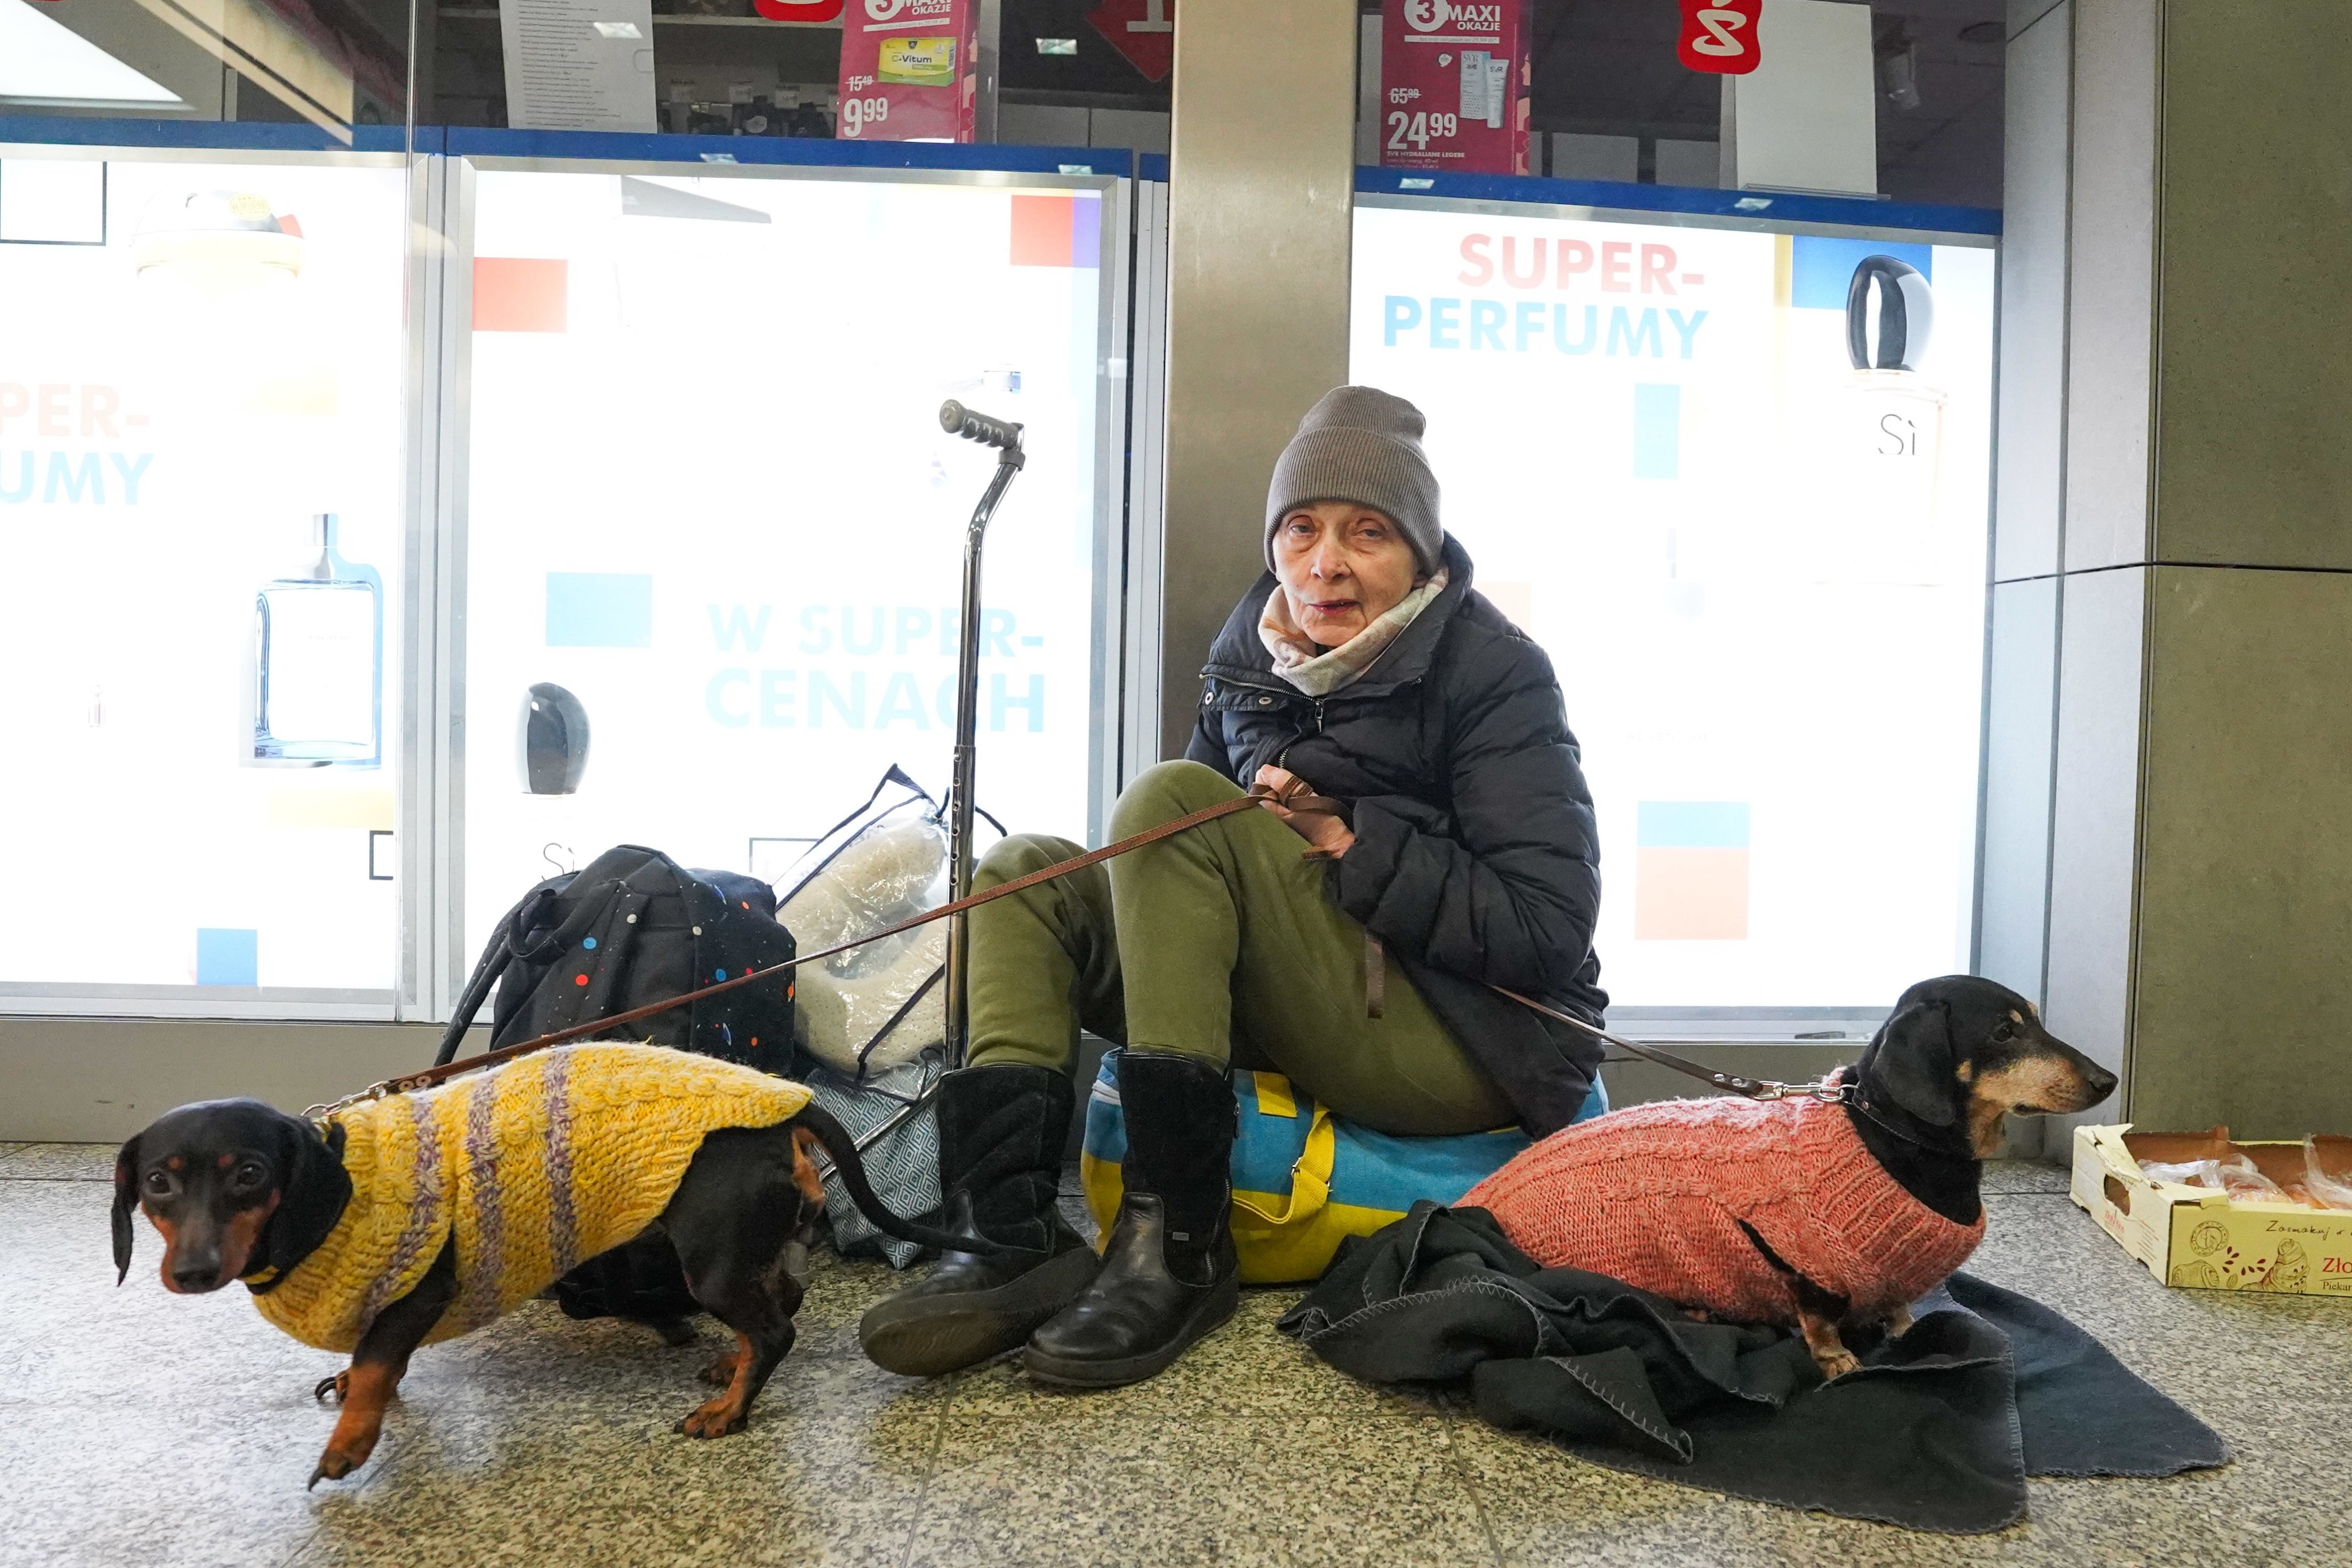 Ukrainian Refugees Rest At Krakow Railway Station